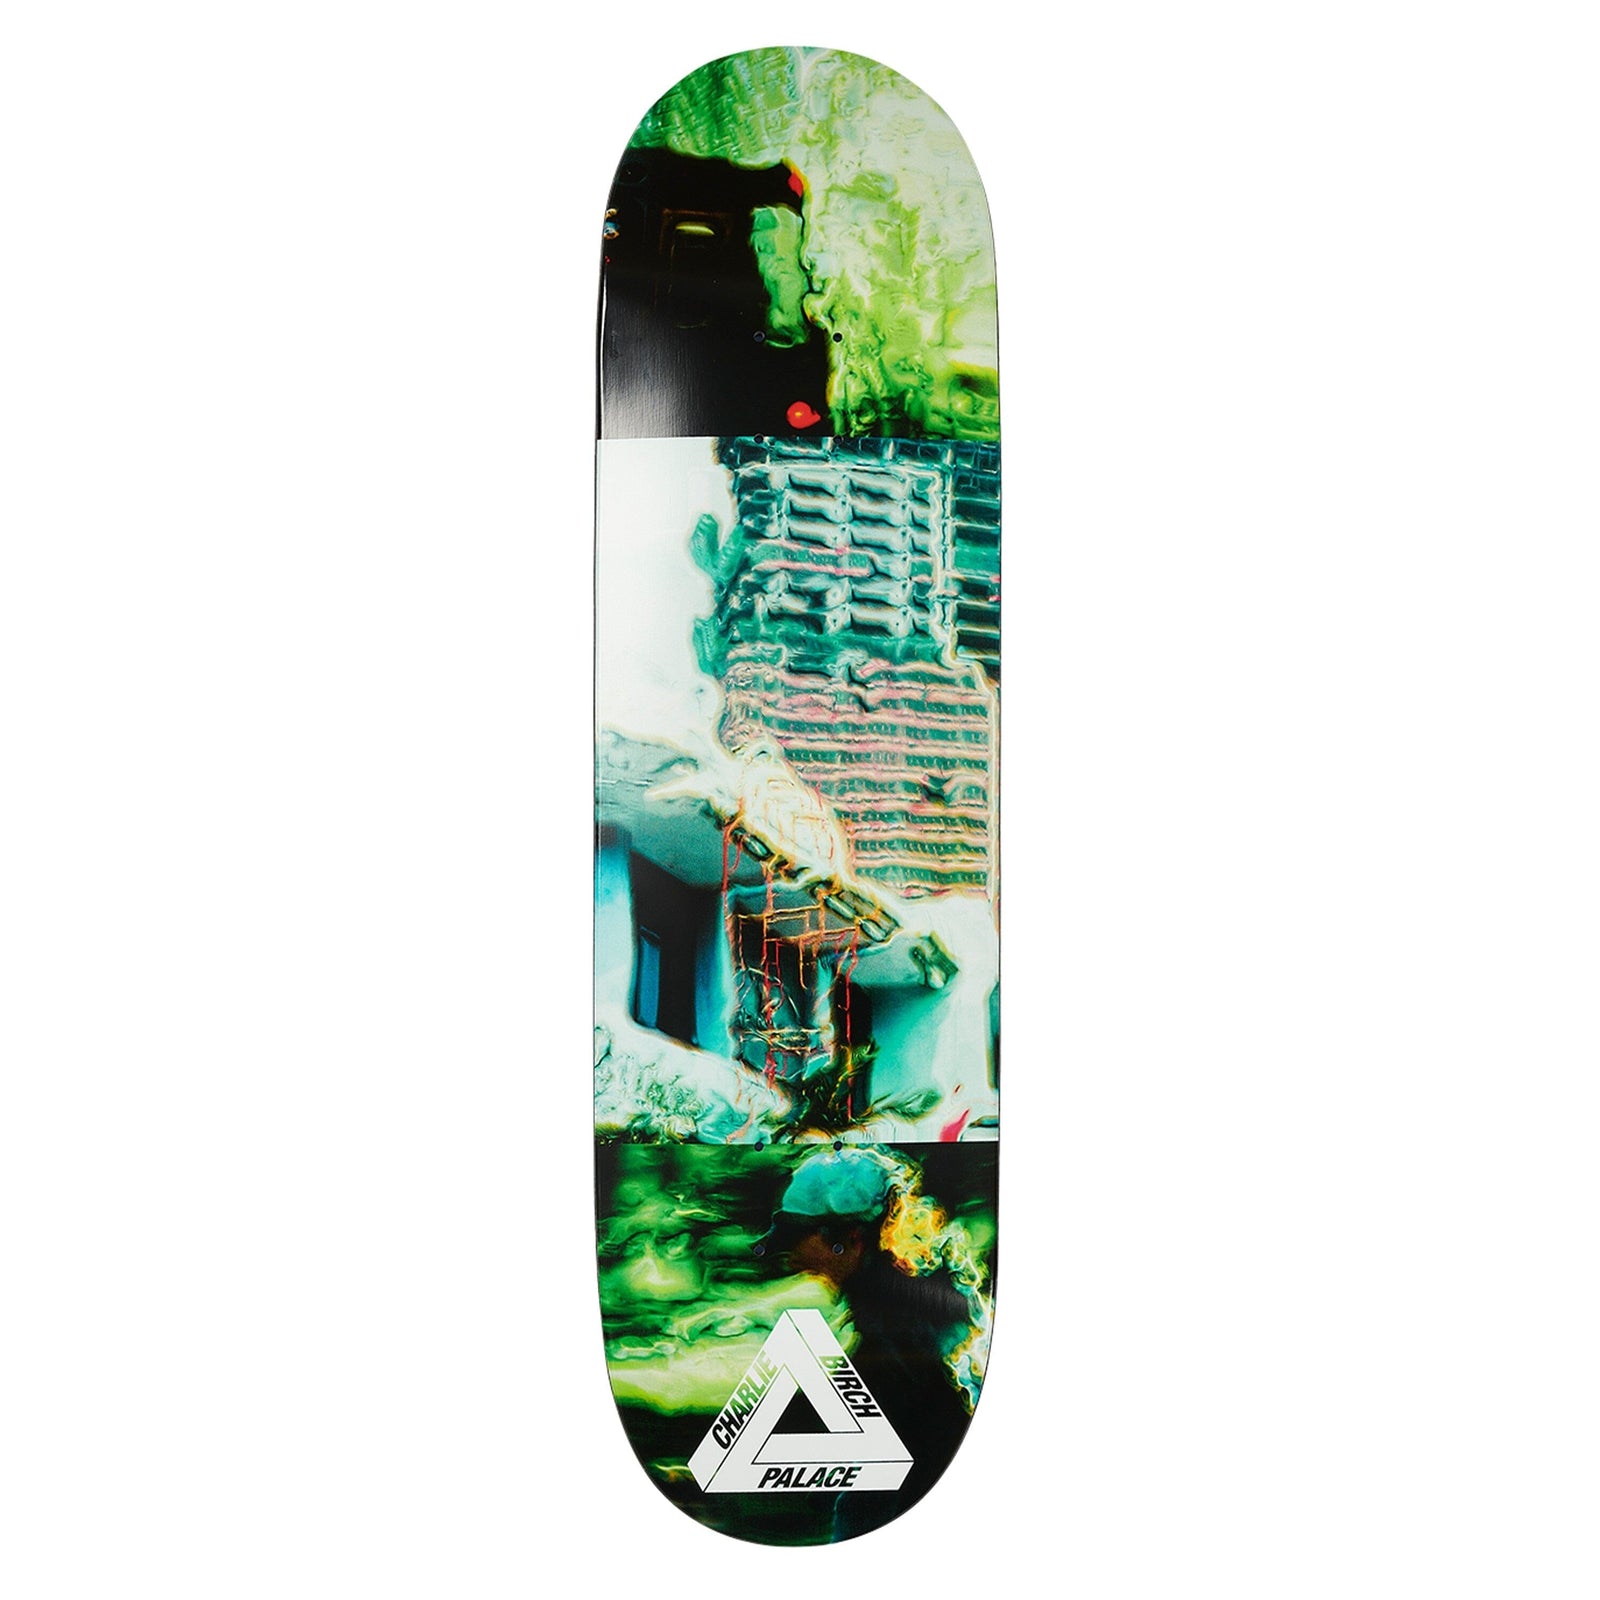 Buy Palace Skateboards Online in Canada at Freeride Boardshop